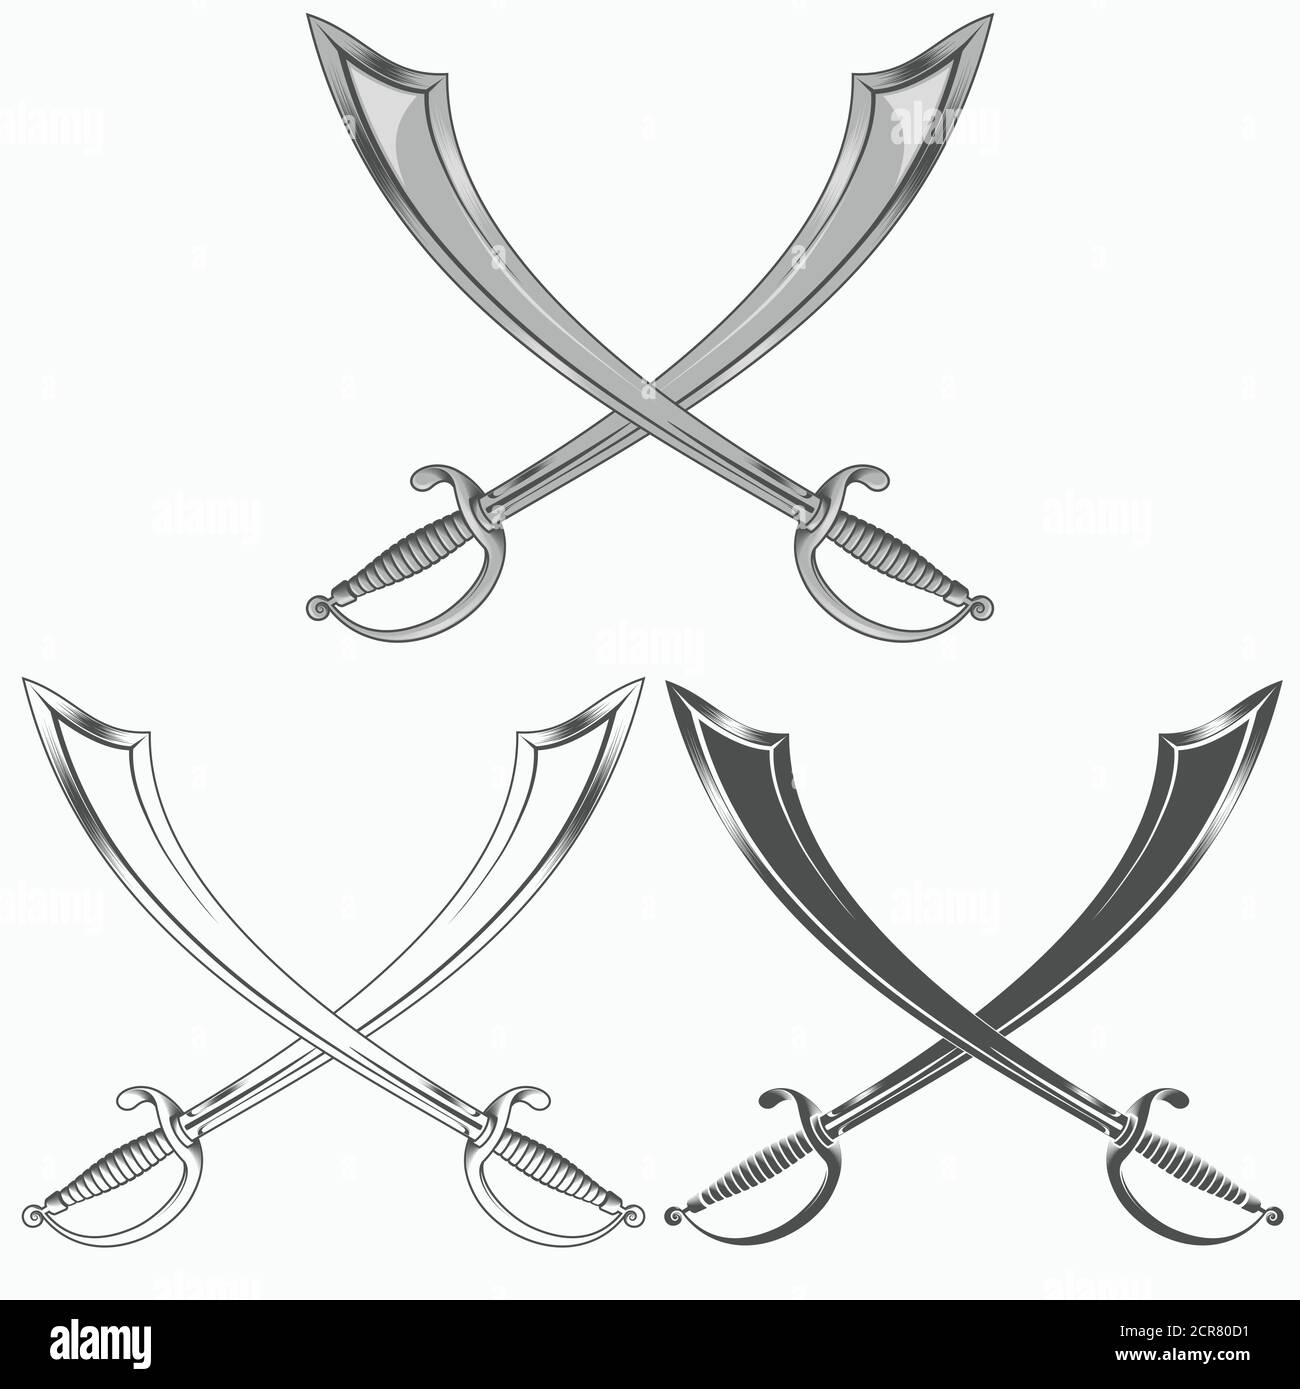 Detailed vector illustration of two herd sword in X, in grayscale. Stock Vector